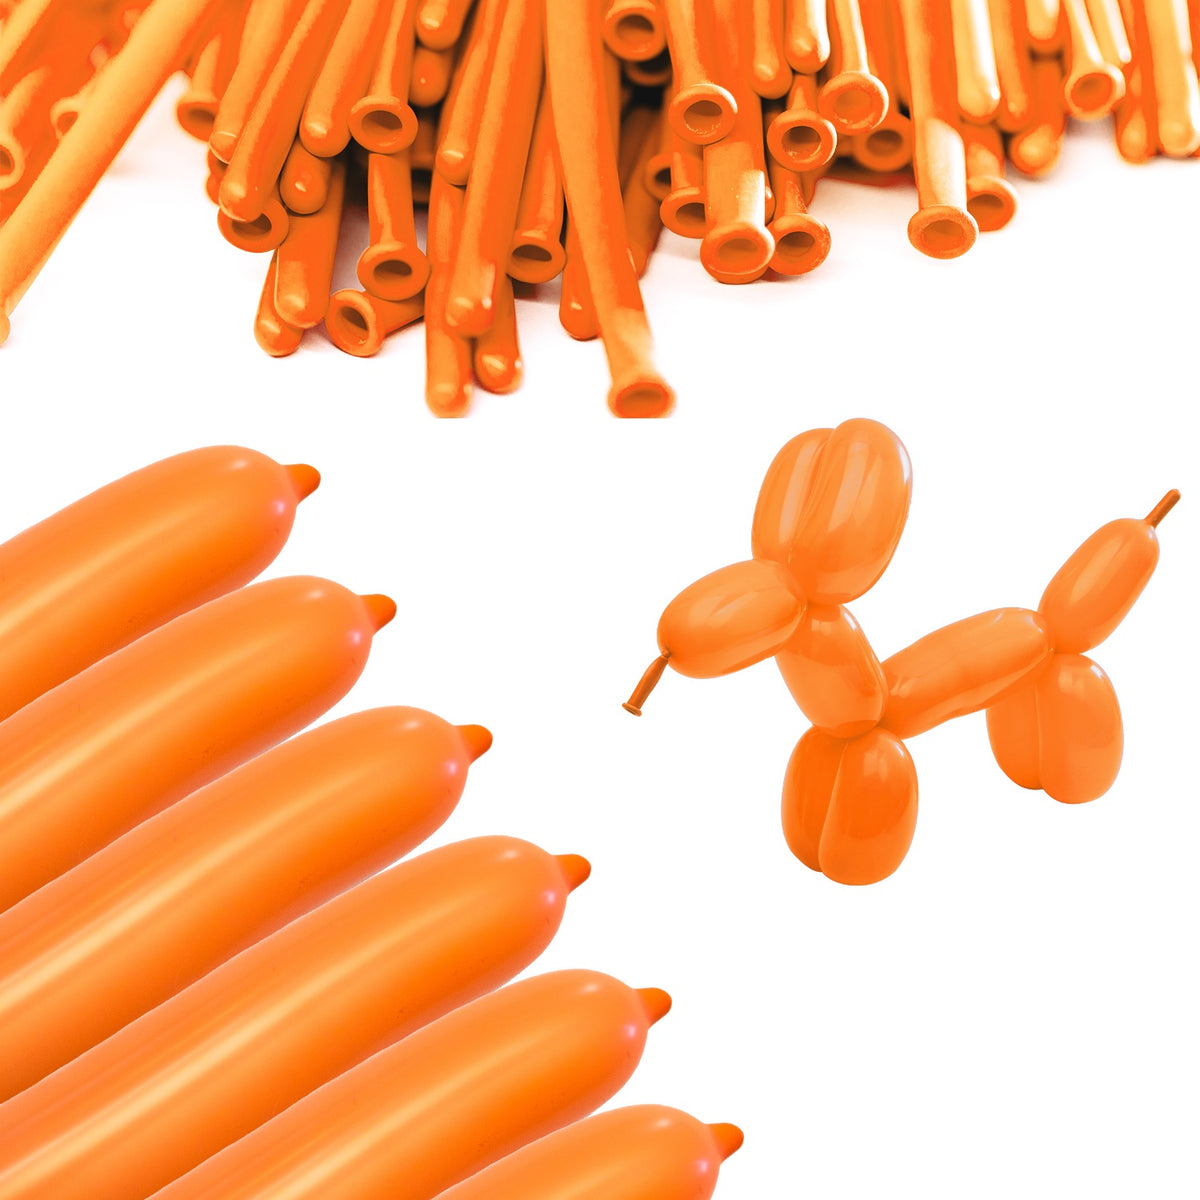 Clownatex 260 Twisting Balloons - Orange (100/bag)